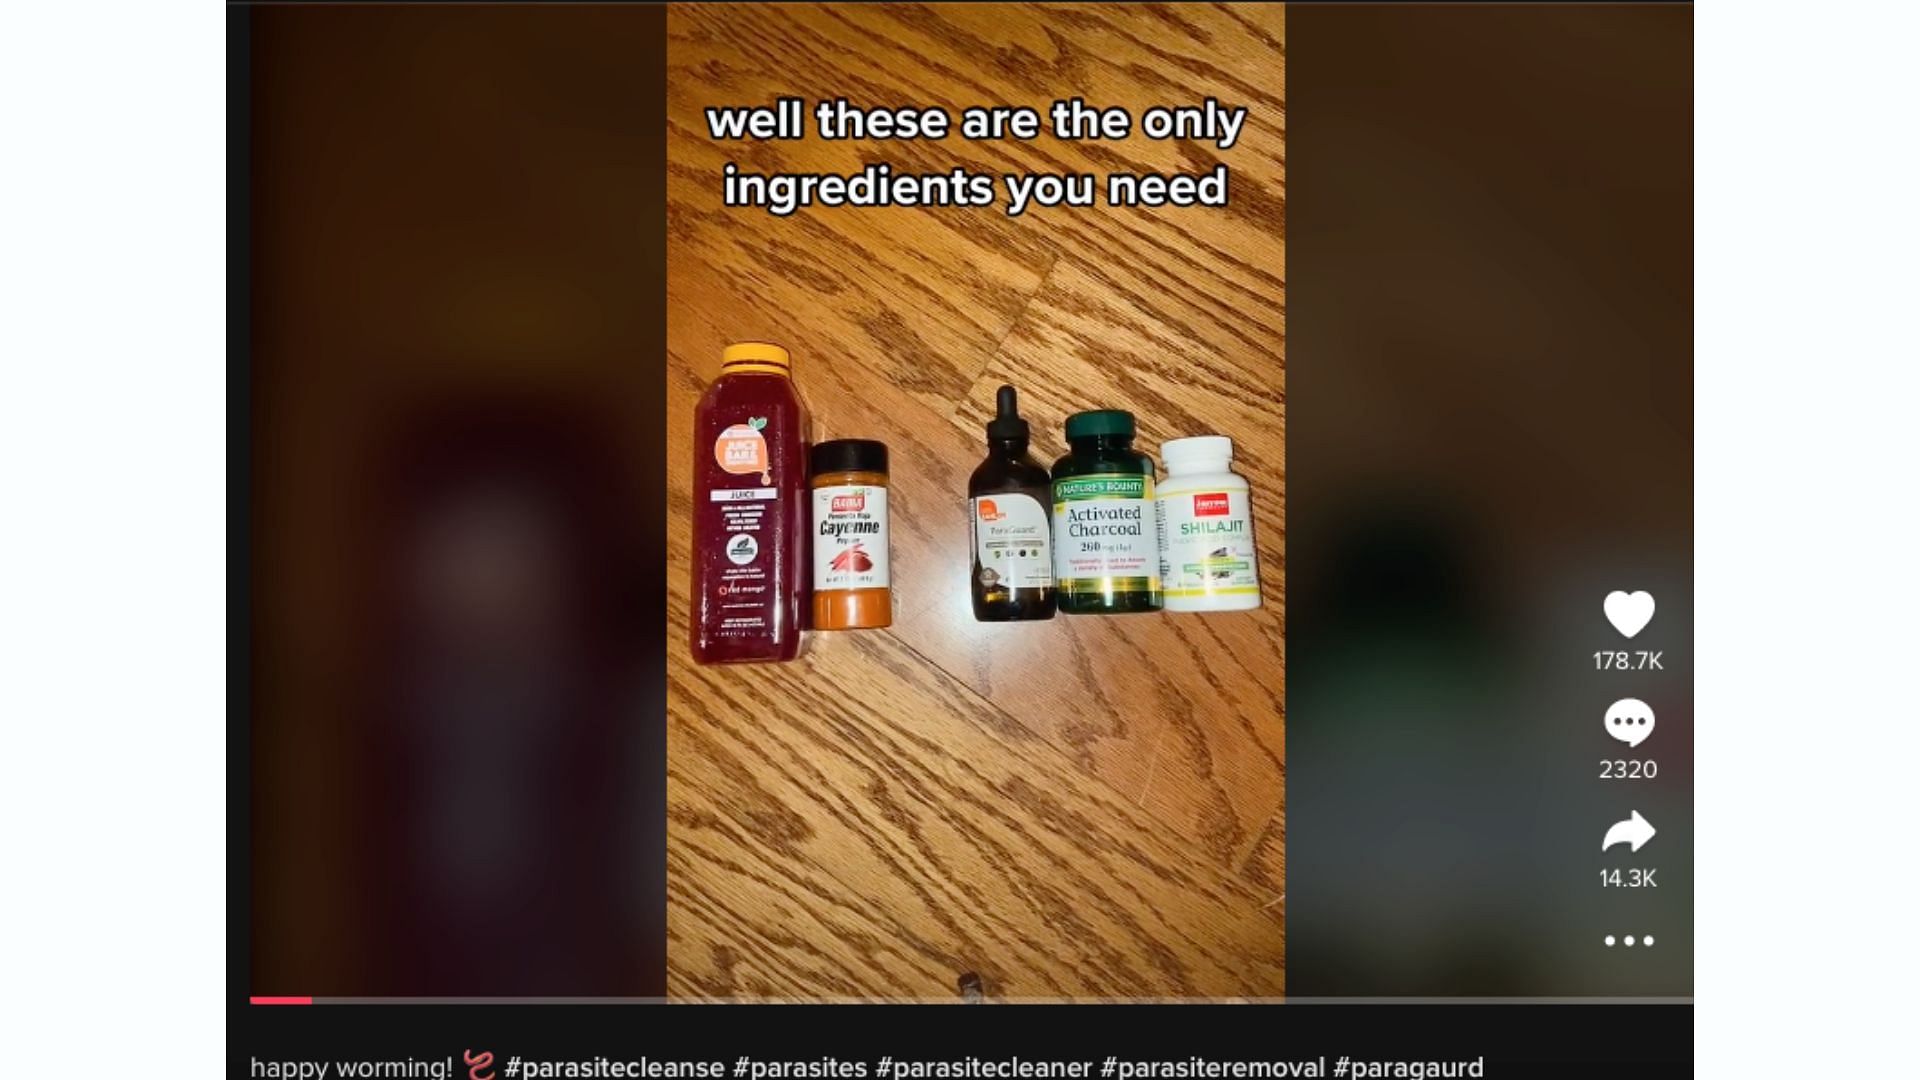 TikToker shares ingredients for parasite cleansing (image via TikTok)